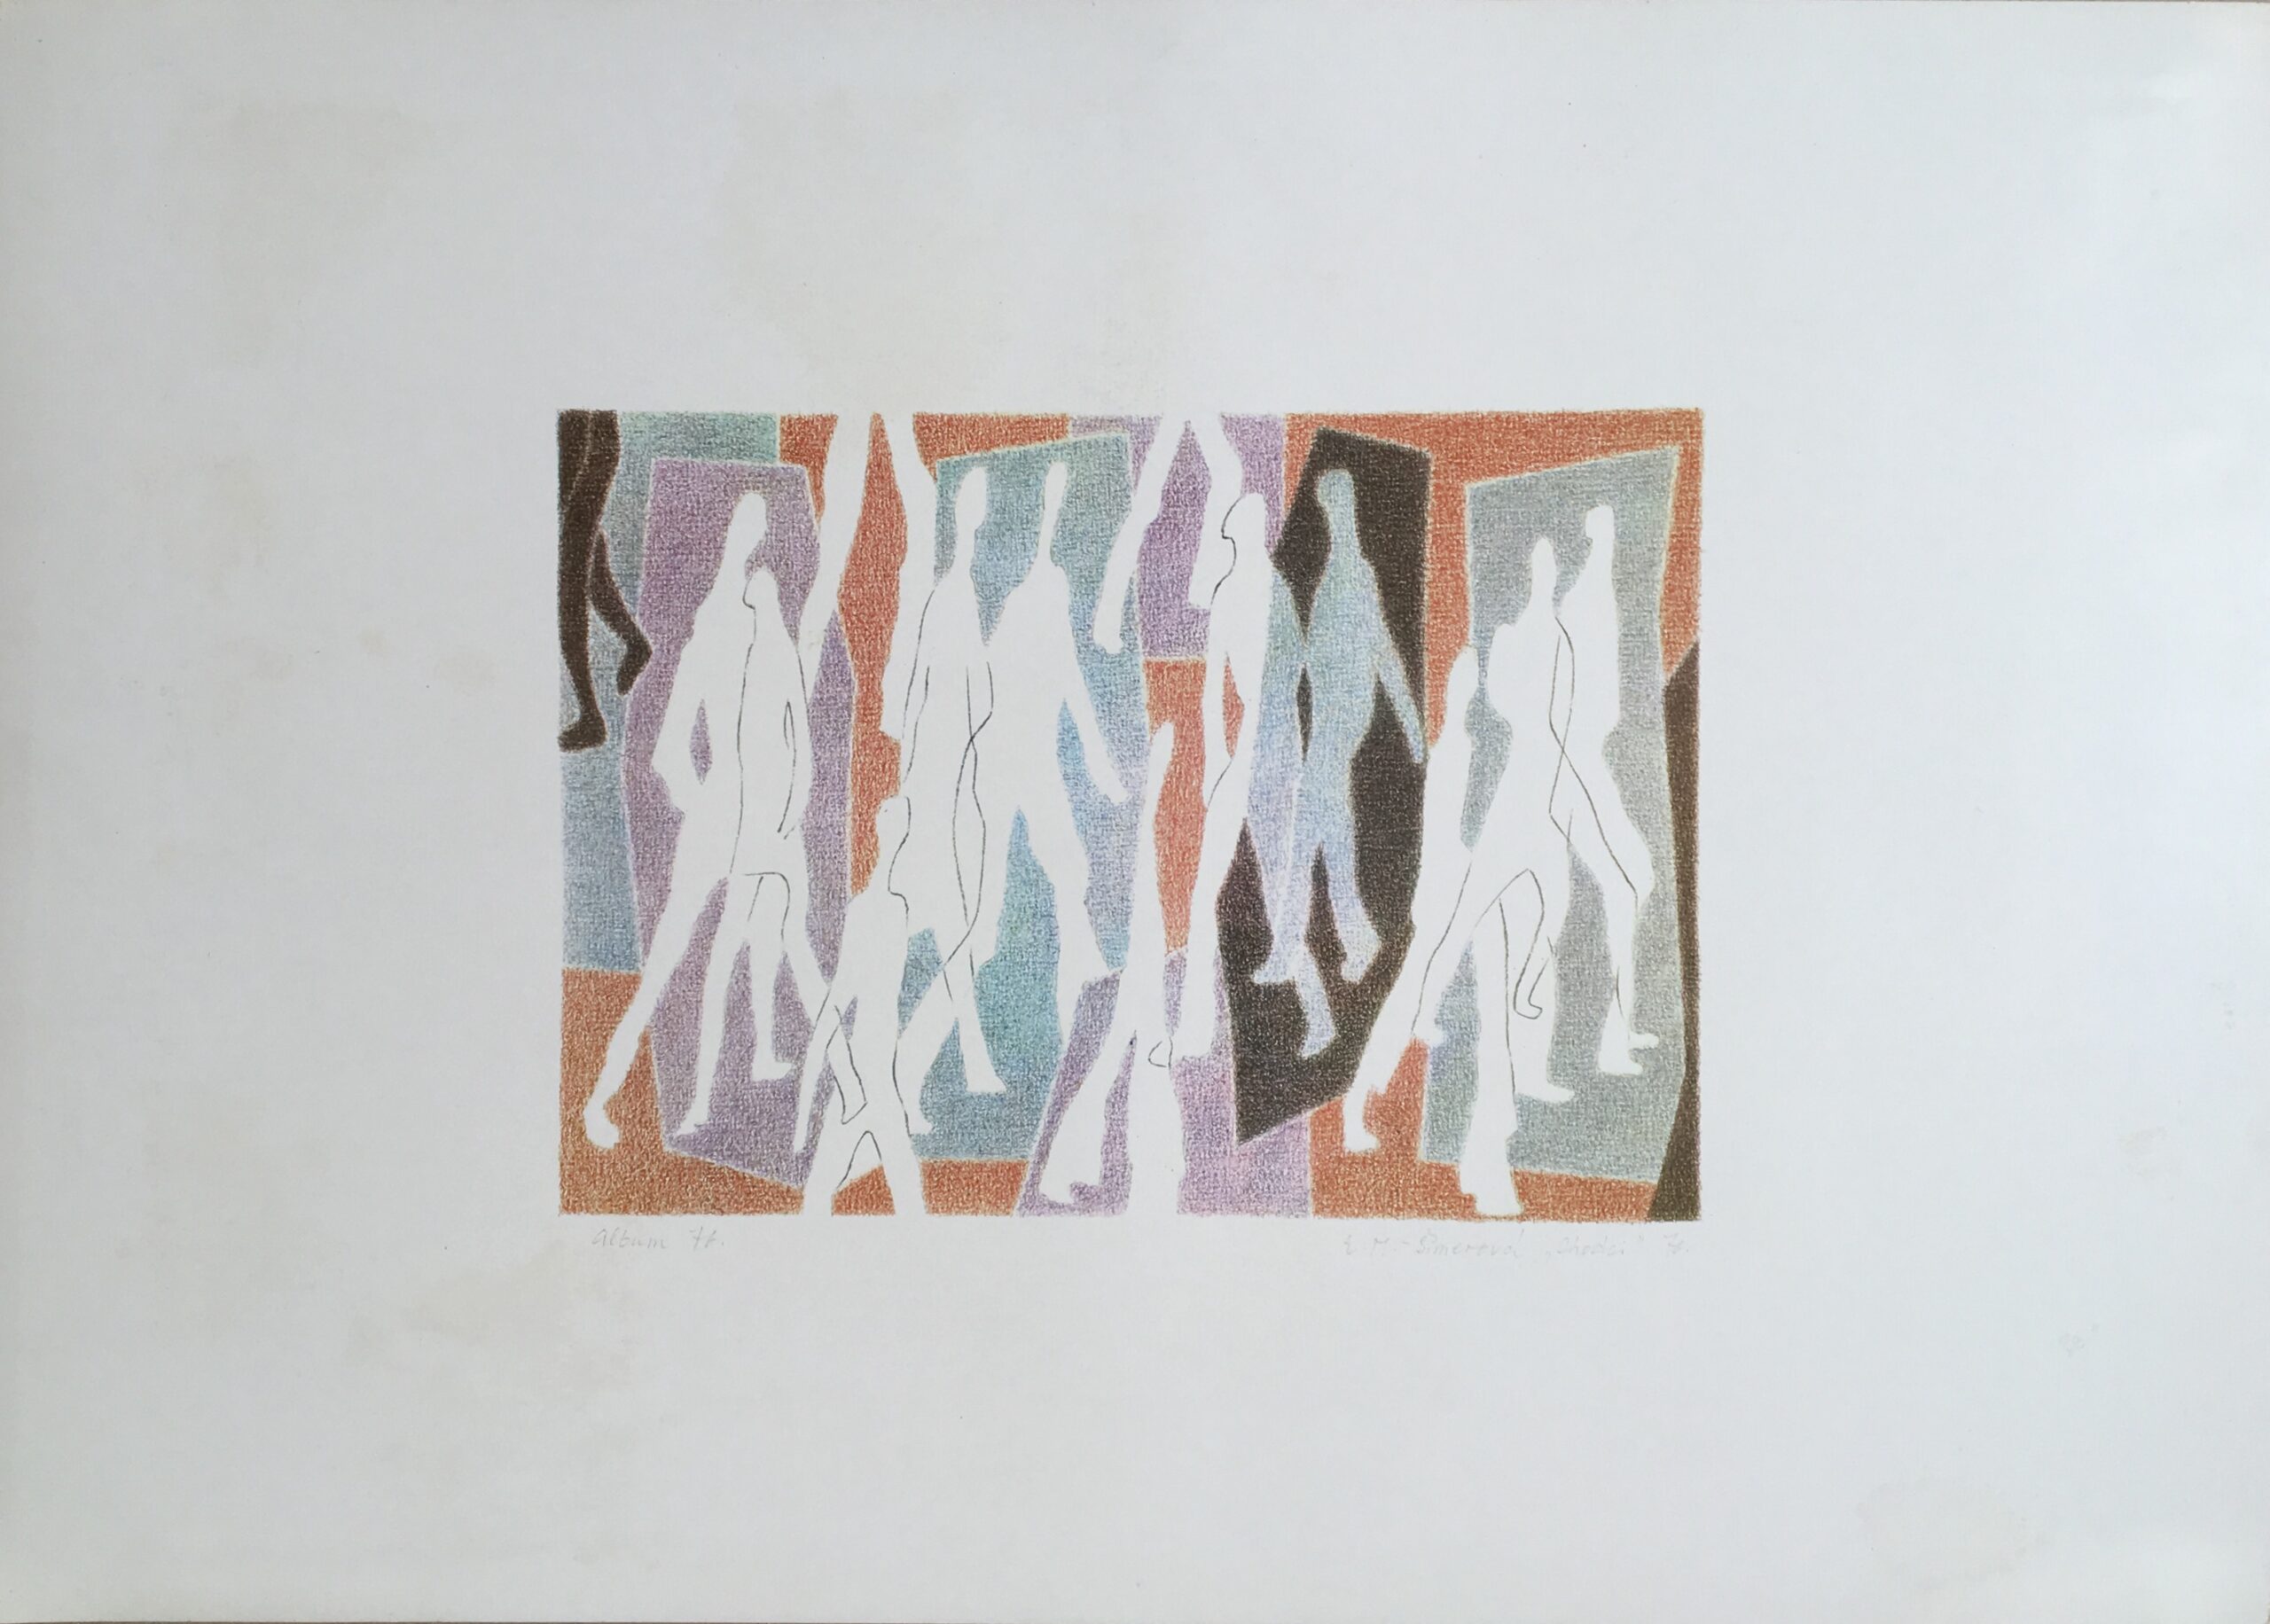 simerova-ester-1976-album-76-serigrafia-38x54.jpg